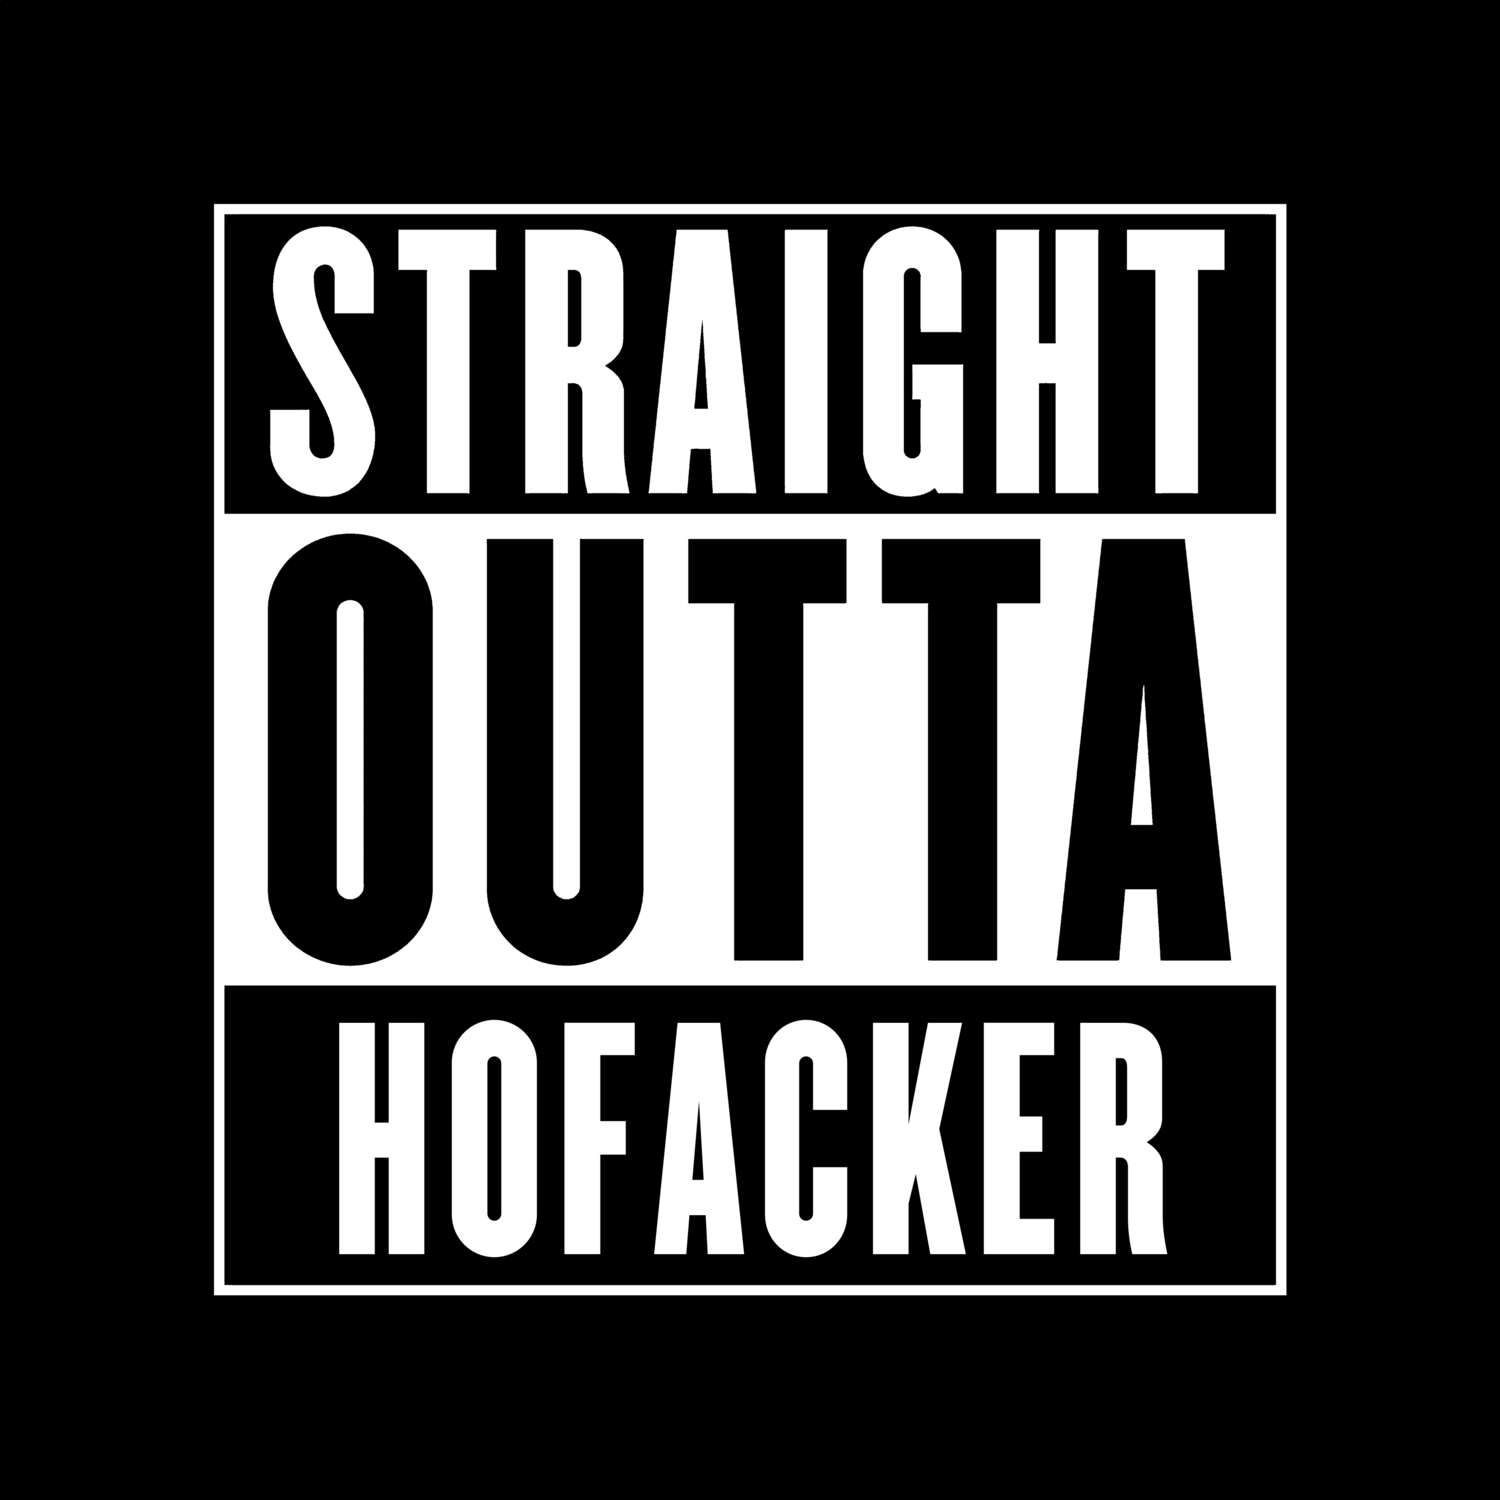 Hofacker T-Shirt »Straight Outta«